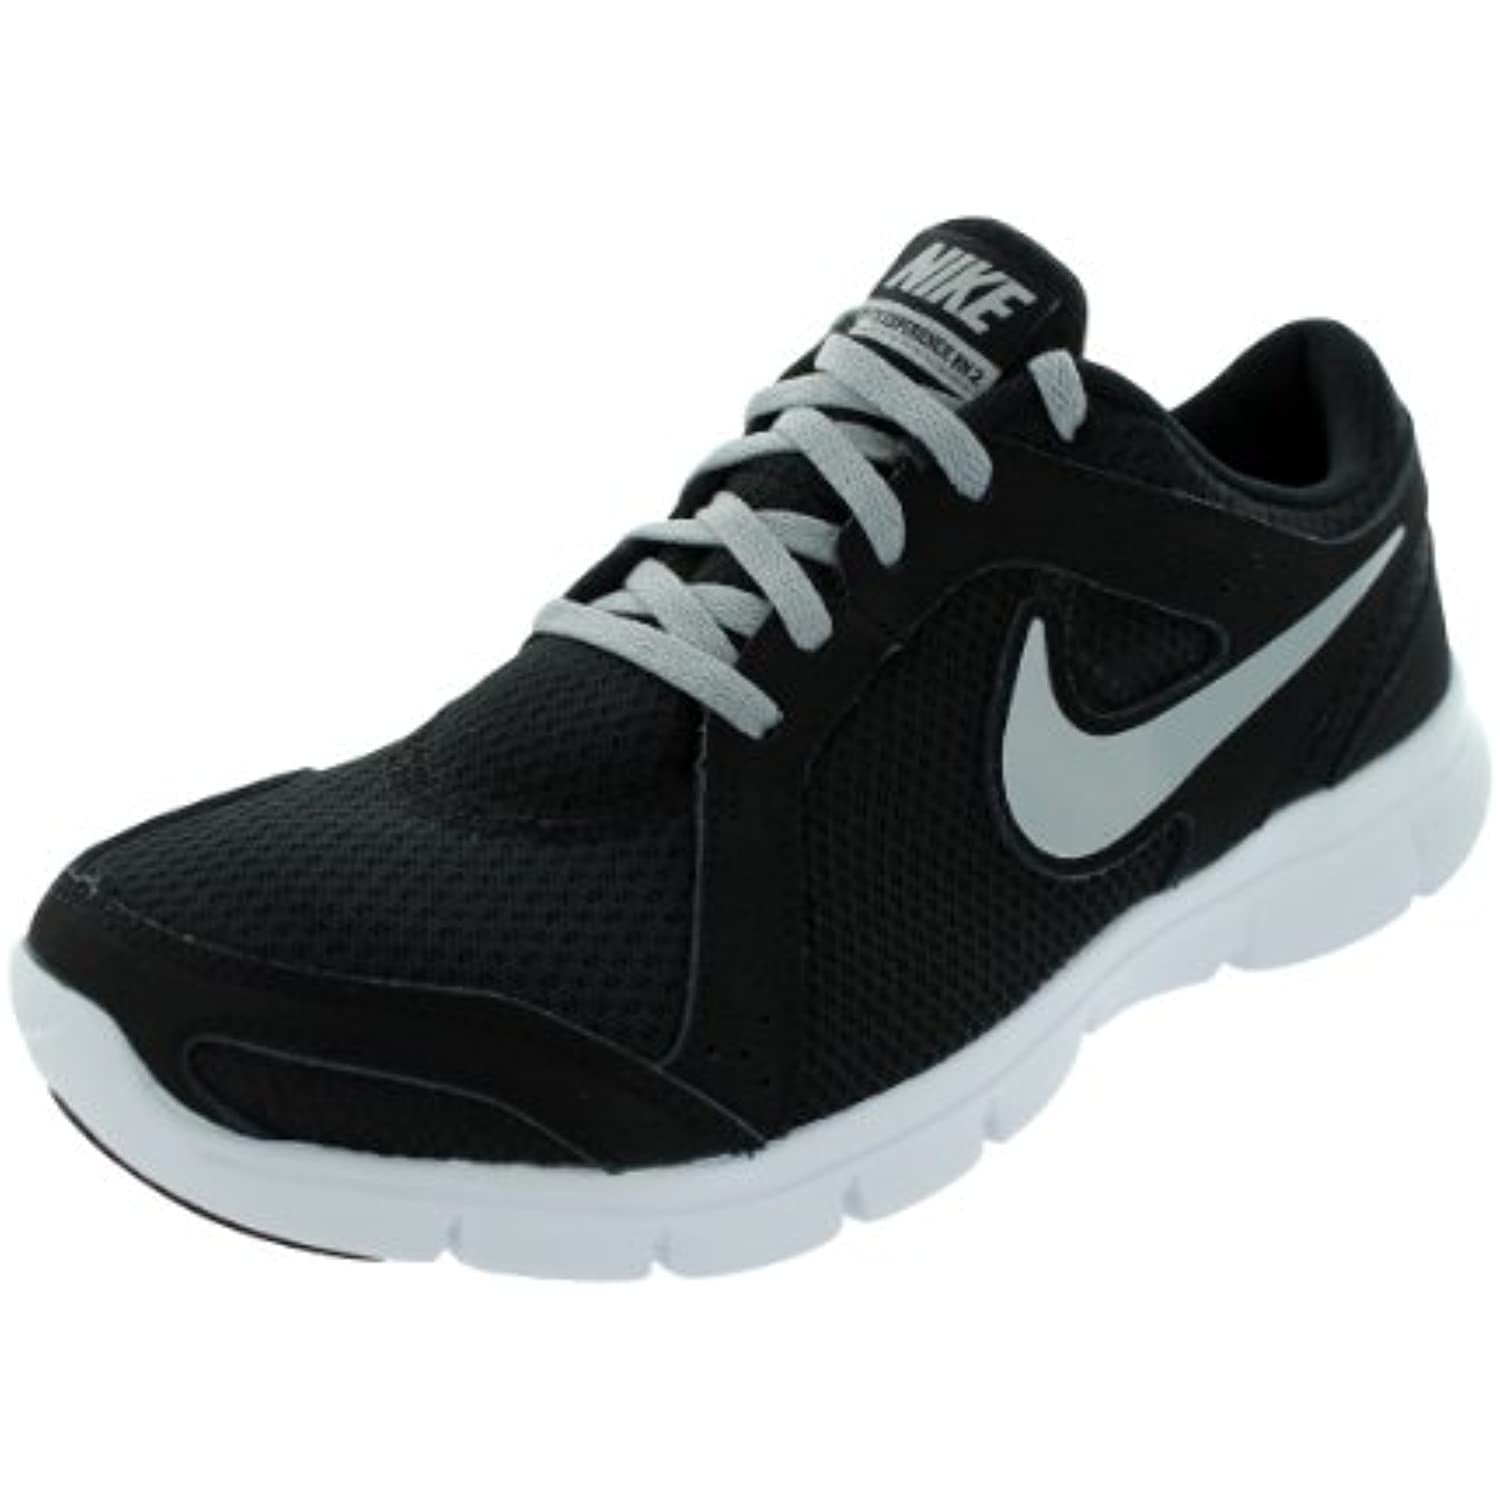 Nike Women's Flex Experience Black/Mtllc Slvr/Wlf Gry/White Running Shoes Women US - Walmart.com